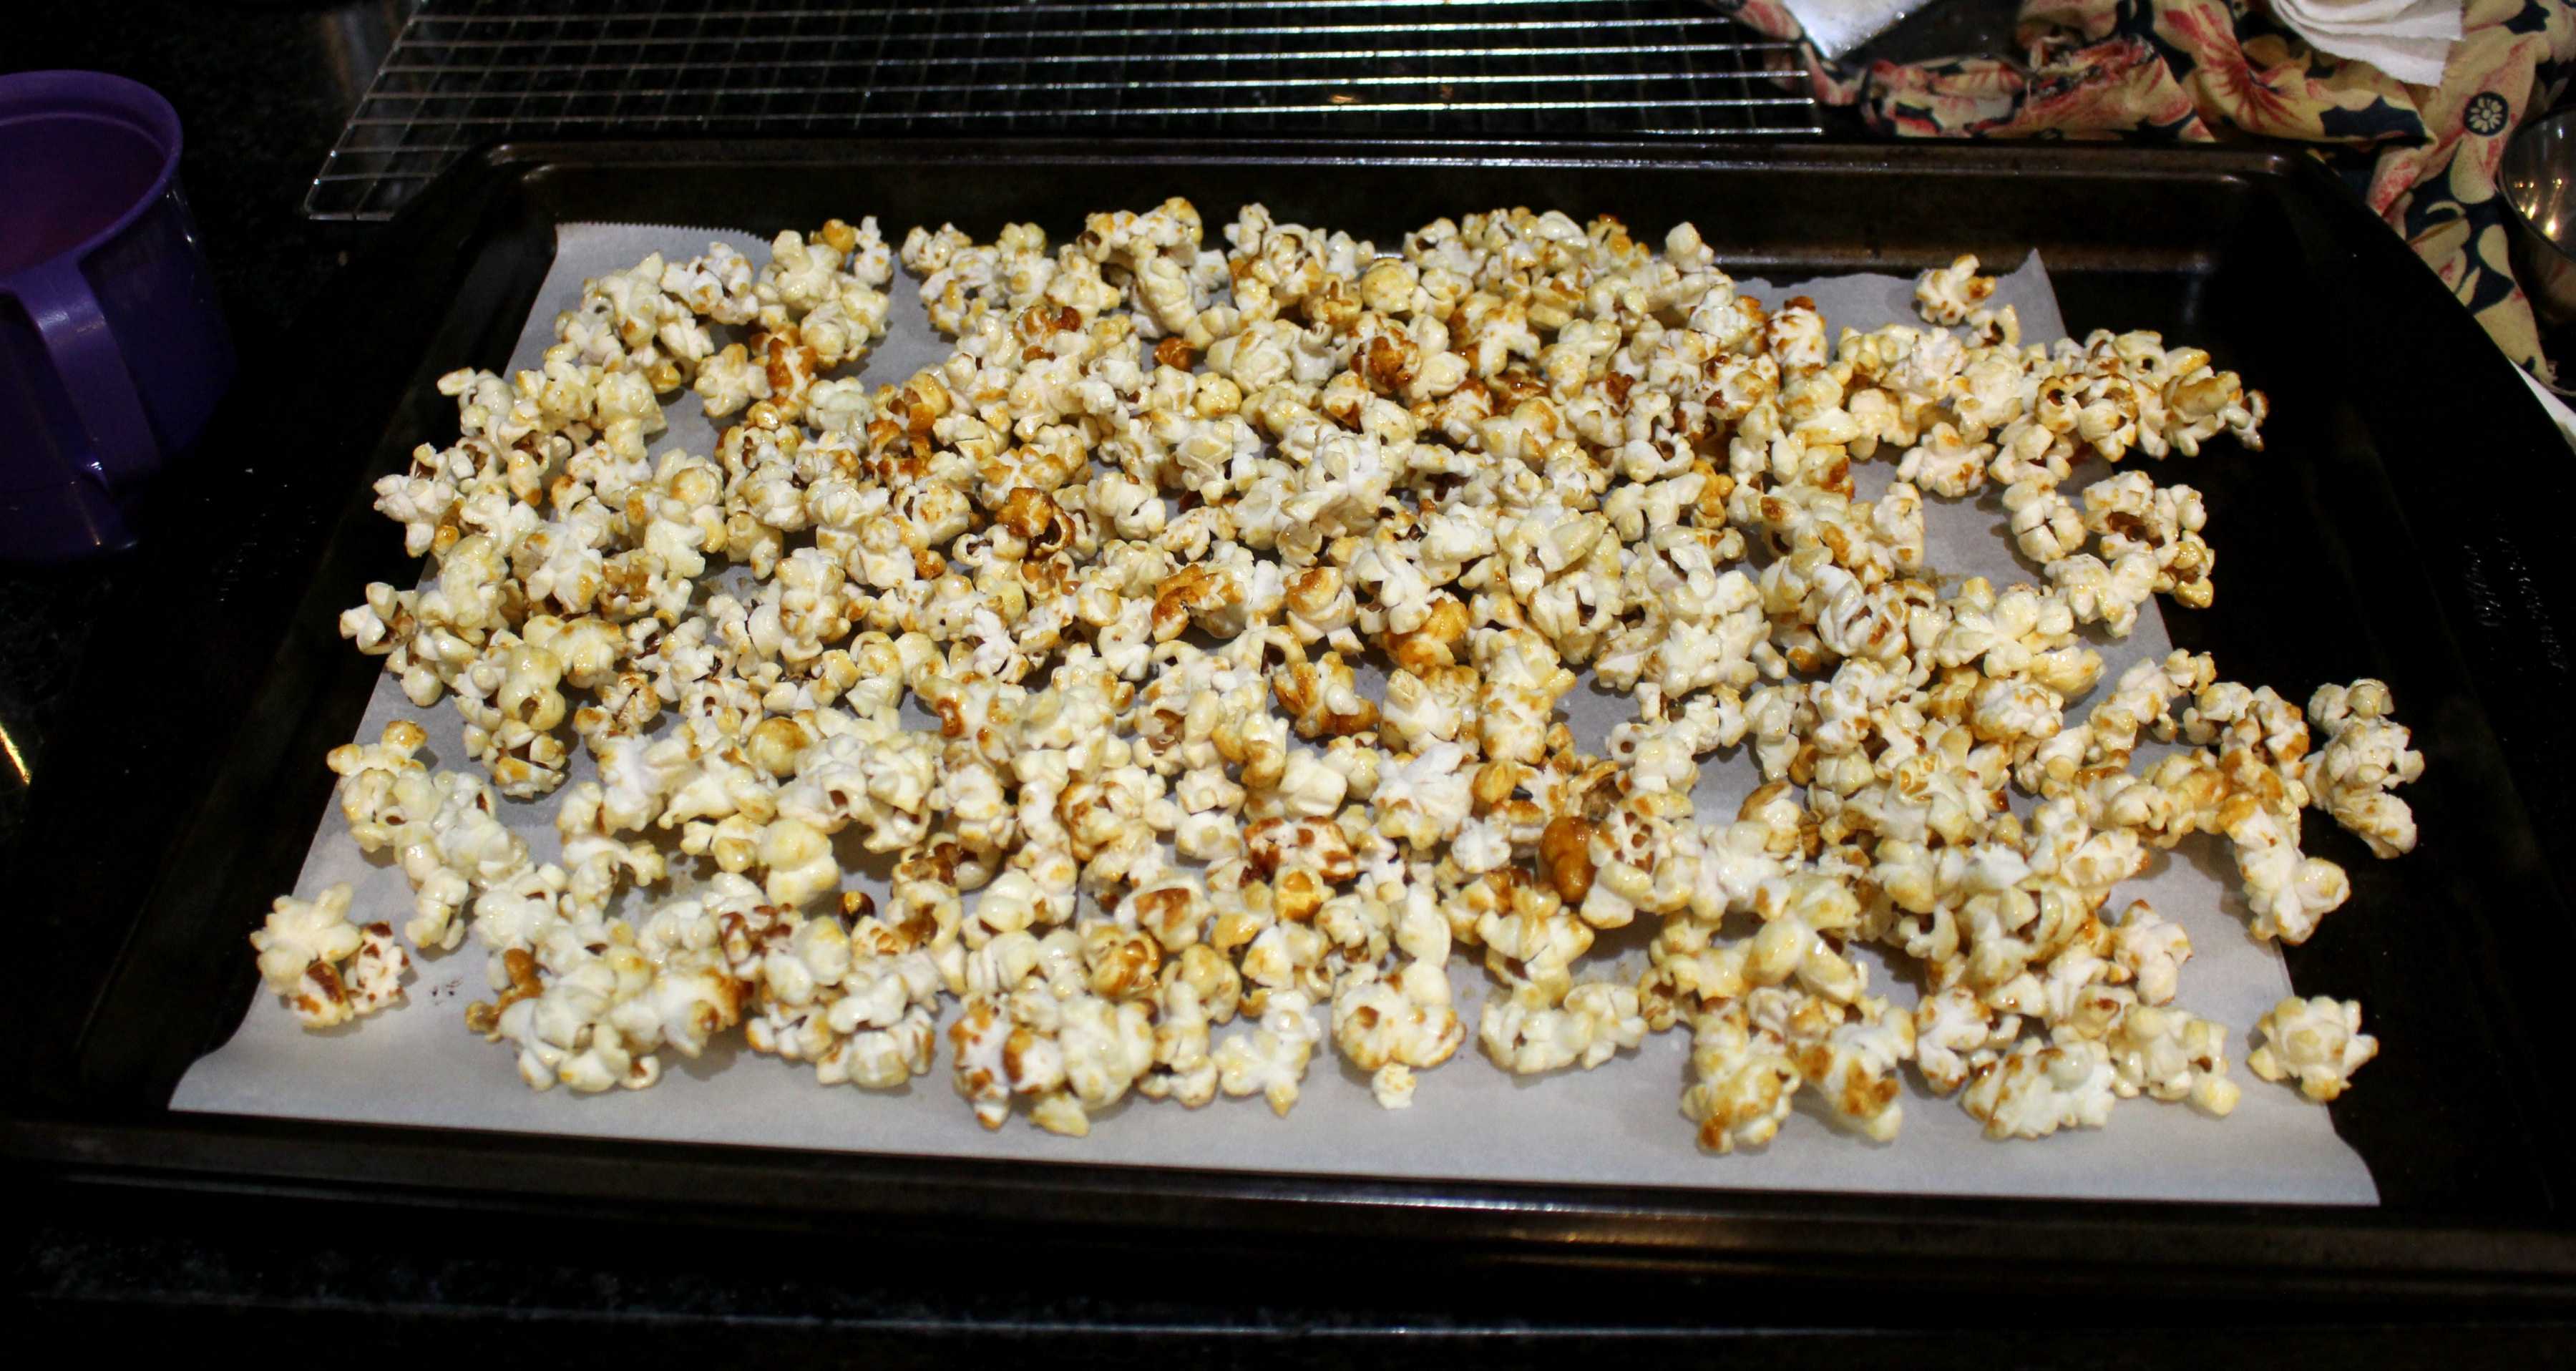 Spreading popcorn in a tray